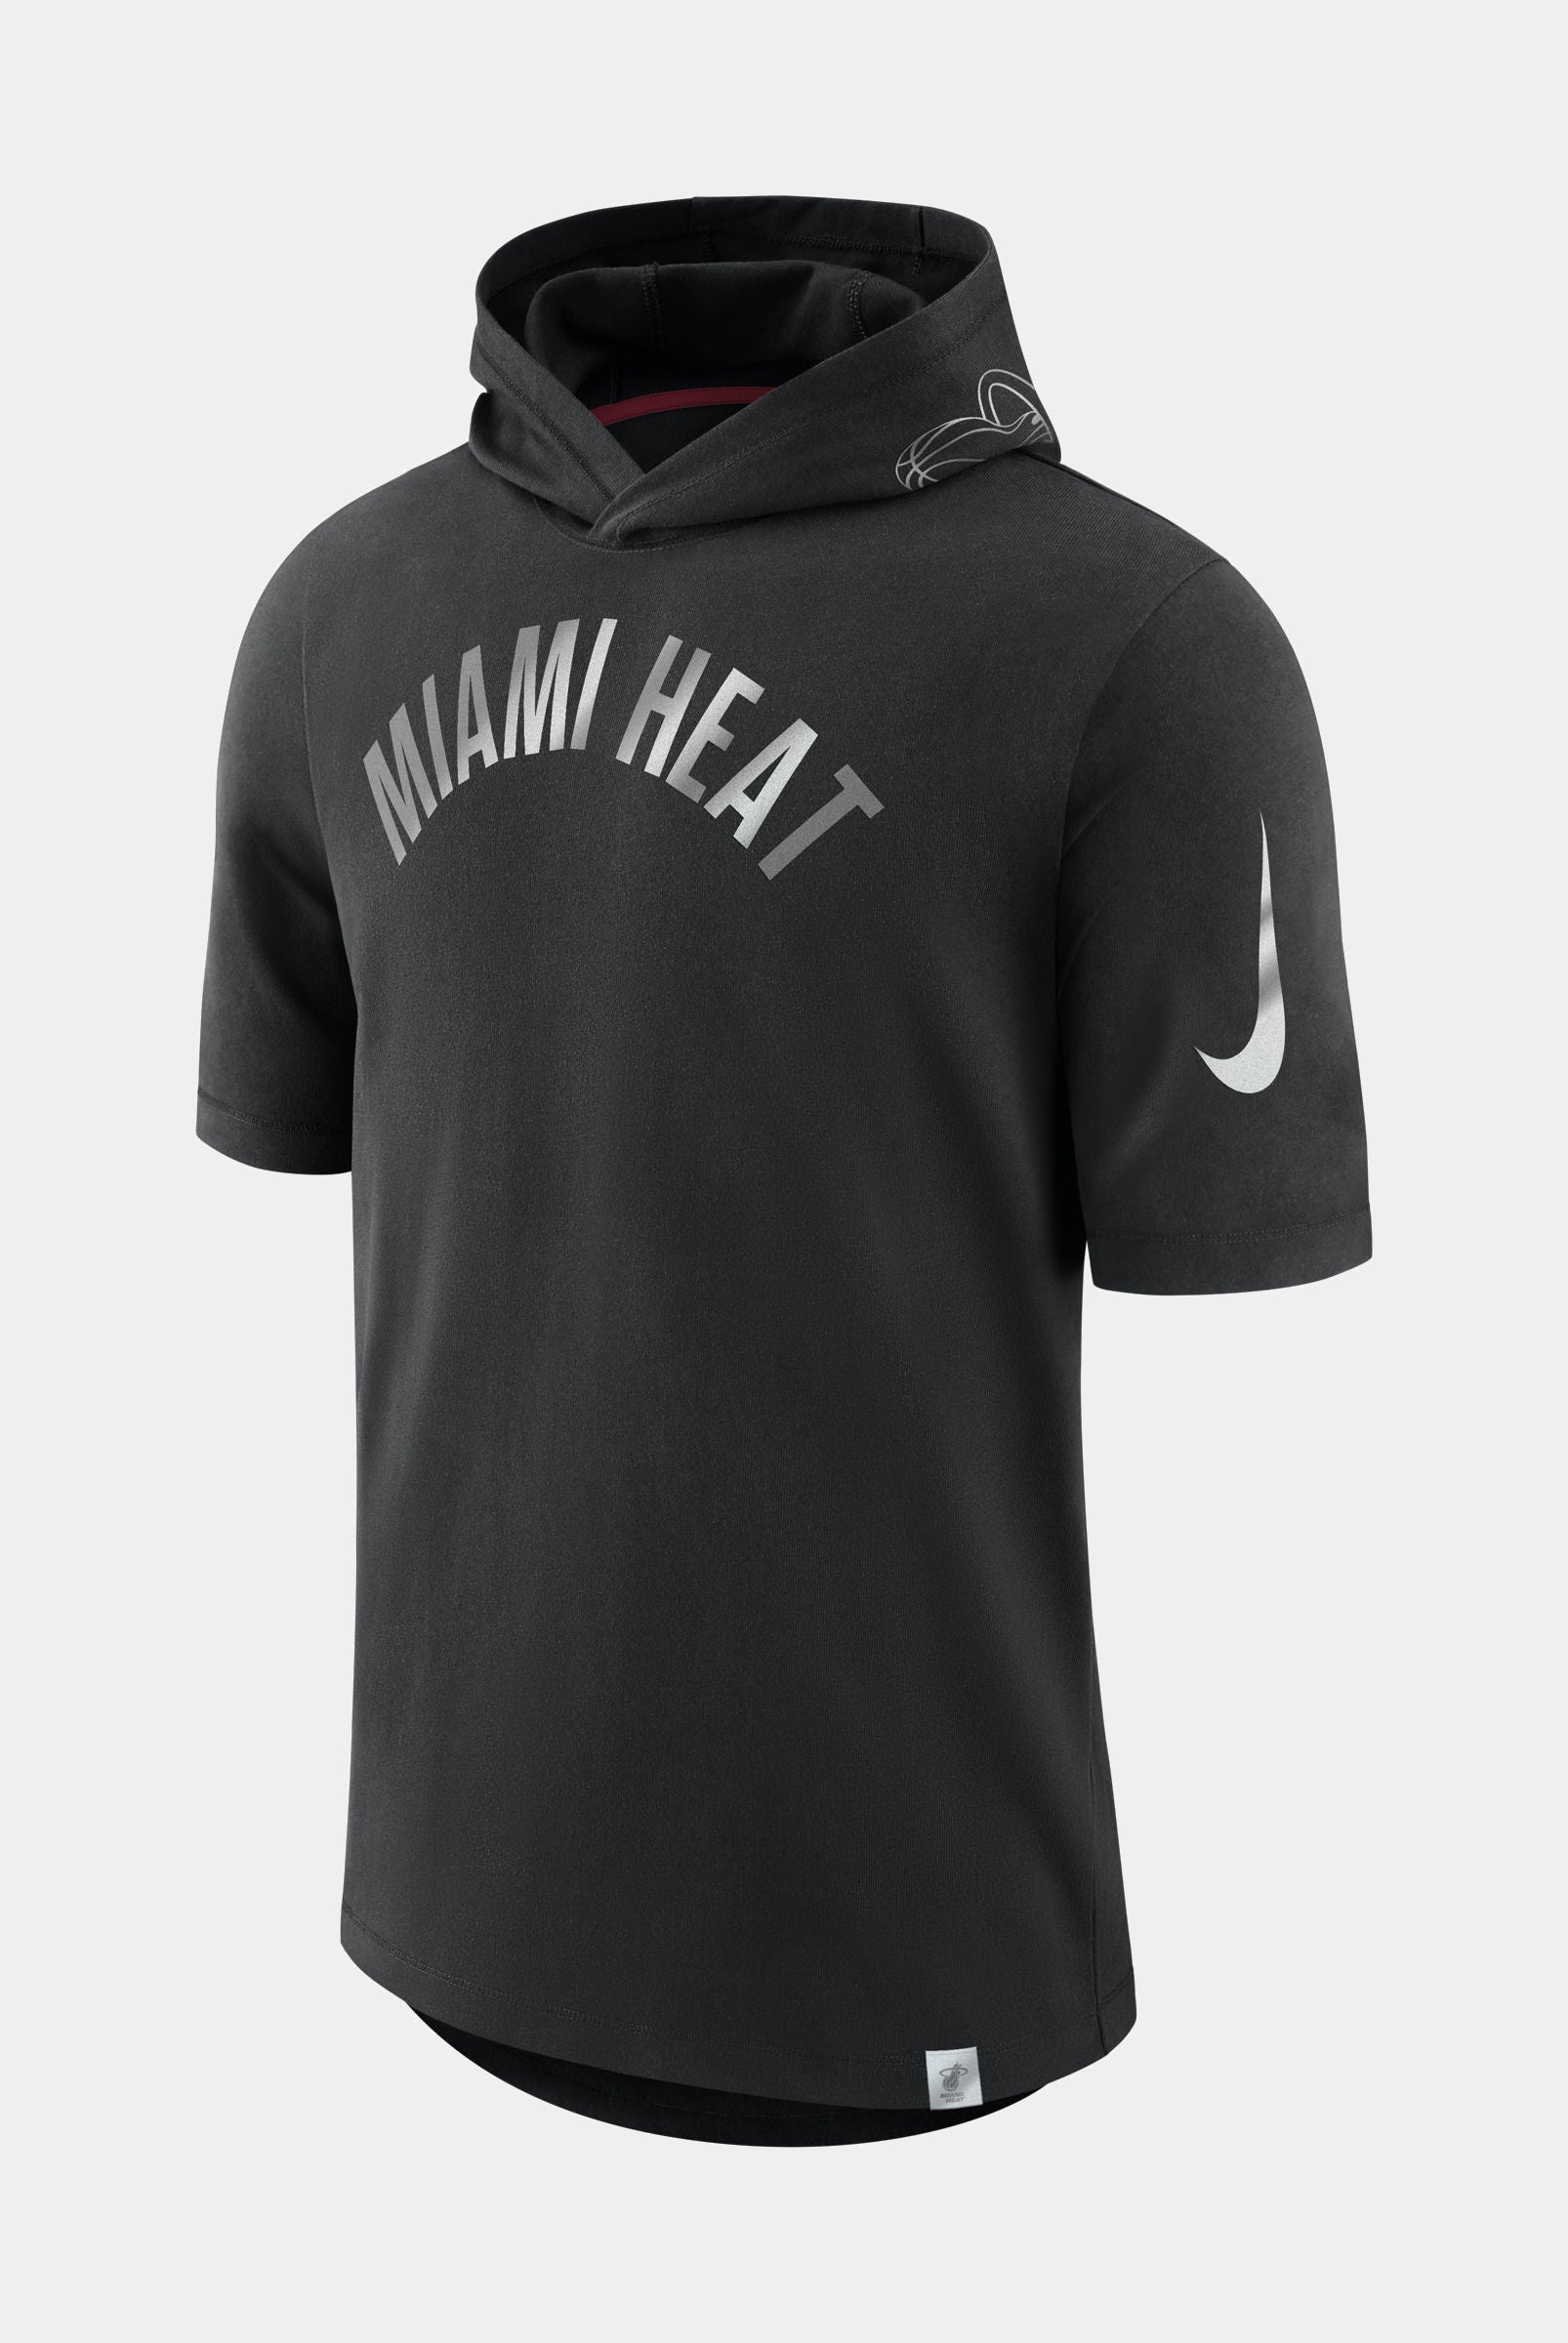 Adidas Miami Heat T Shirt Men Large Black Short Sleeve Logo NBA